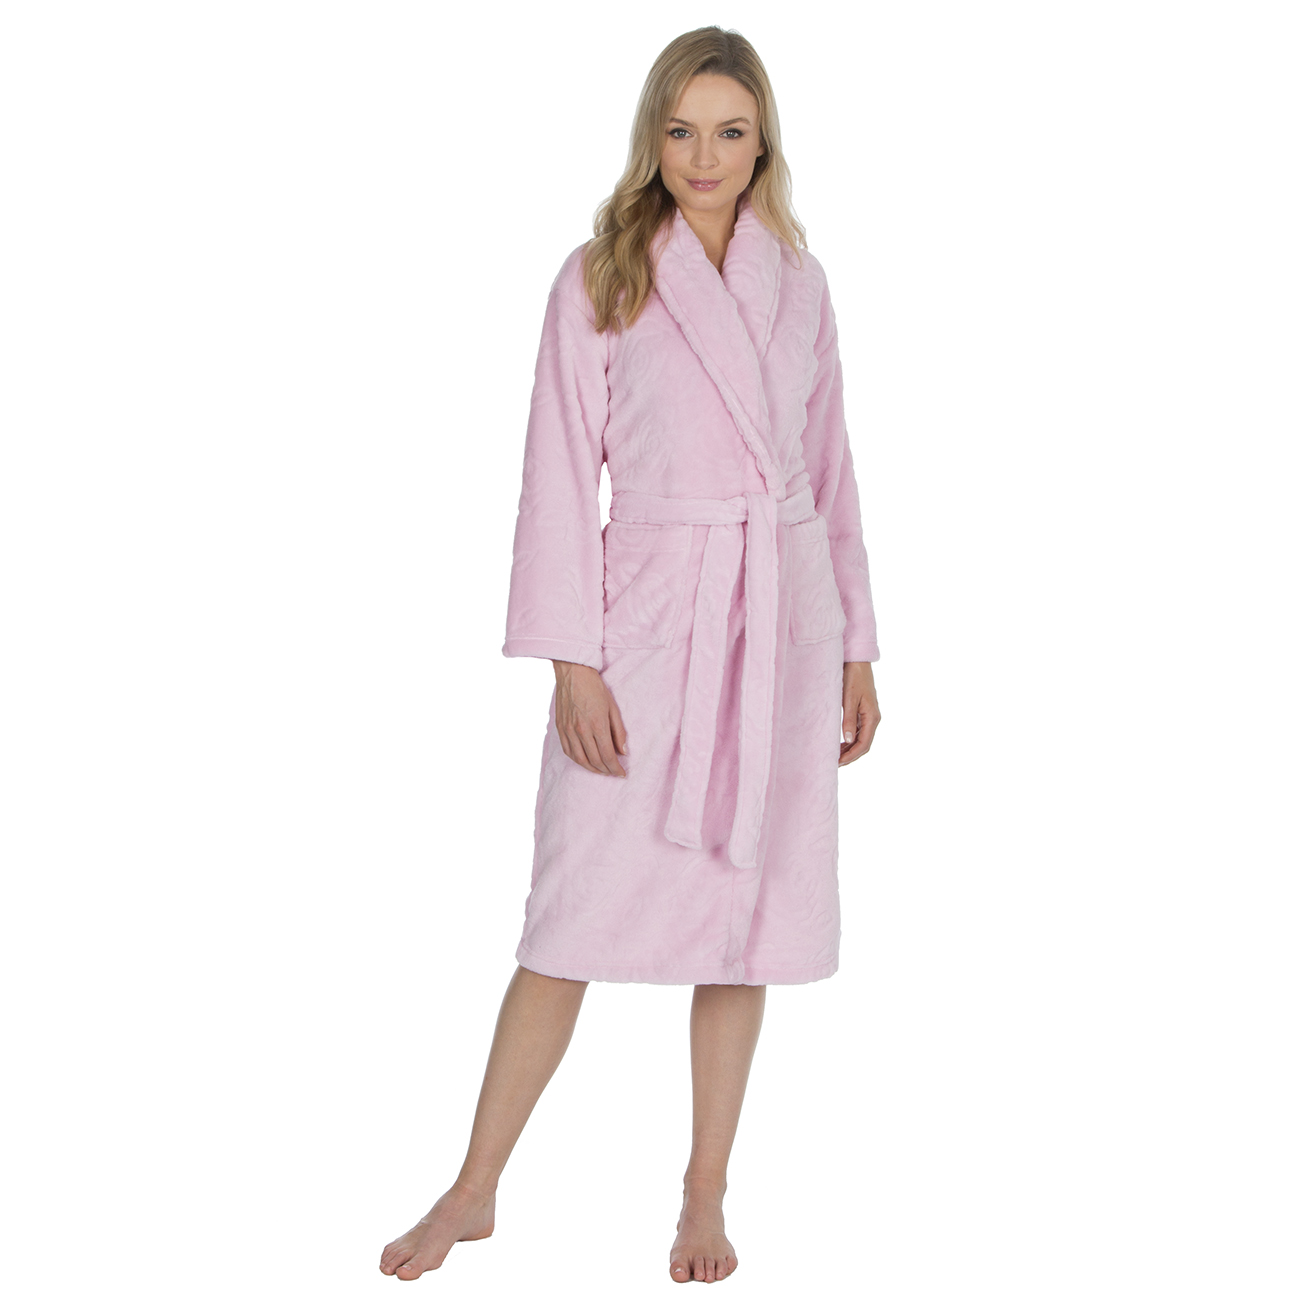 Blush Pink ladies satin feel dressing gown AMANDA | eBay